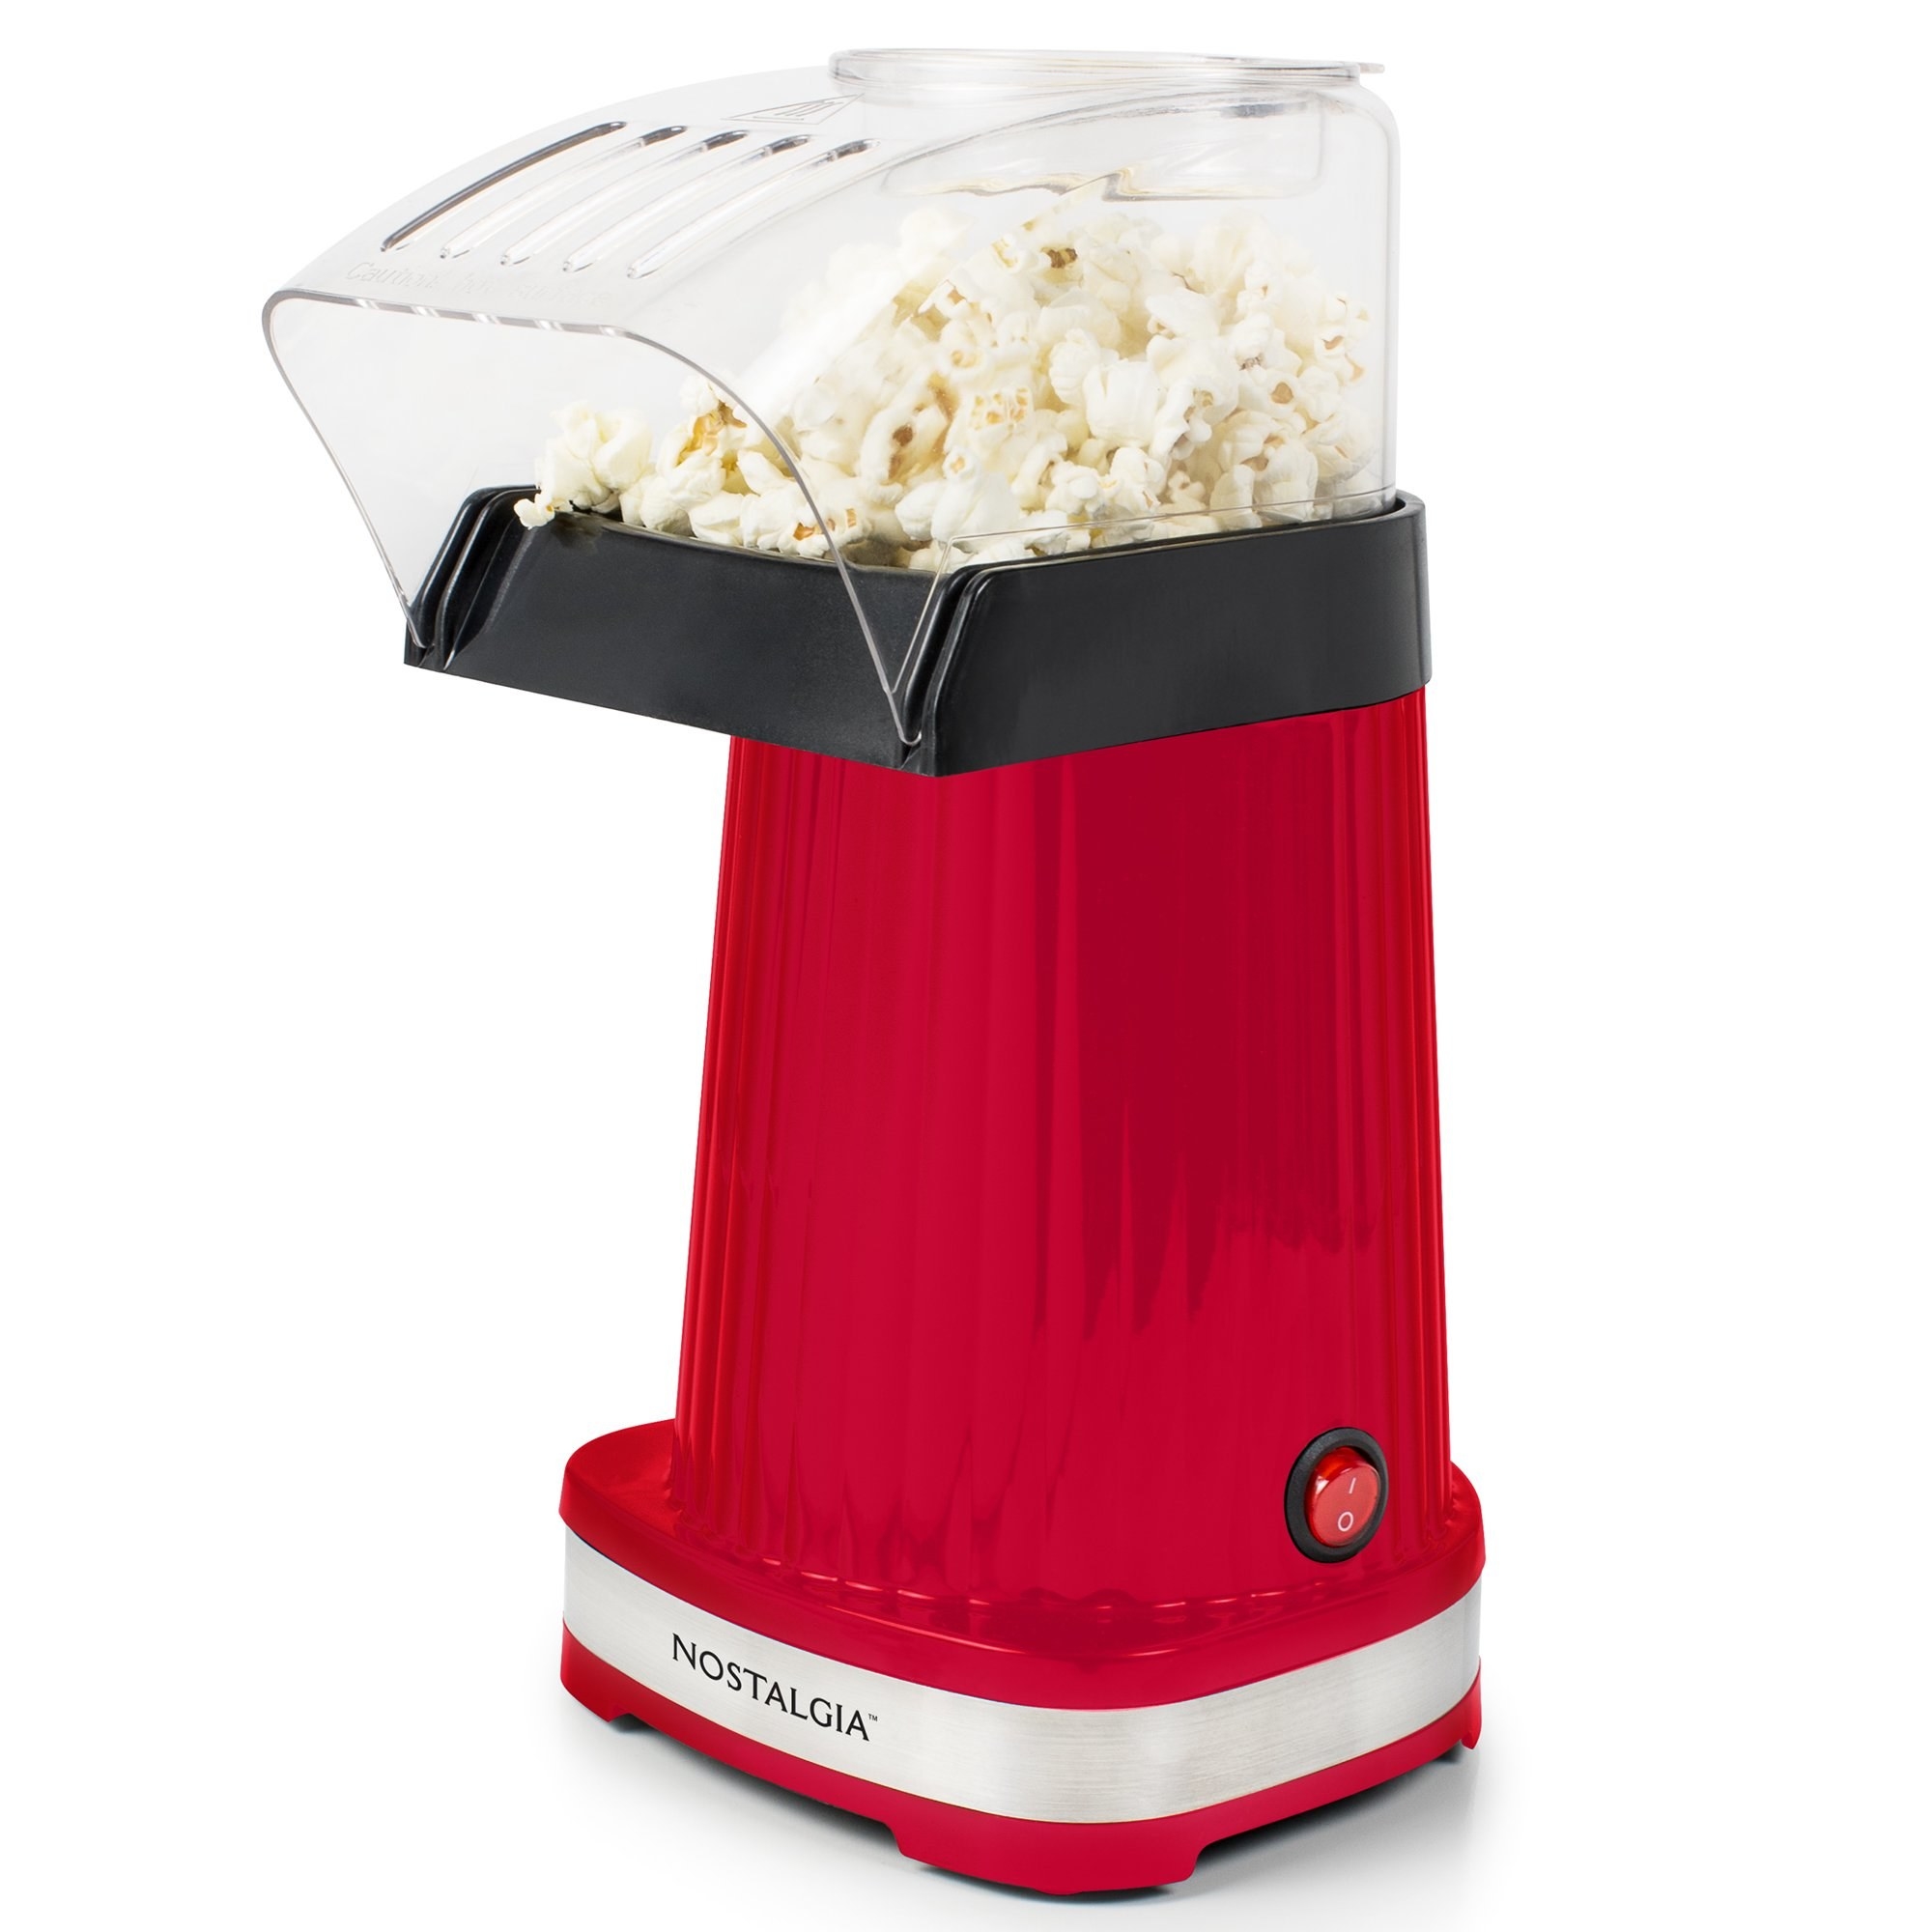 the popcorn maker